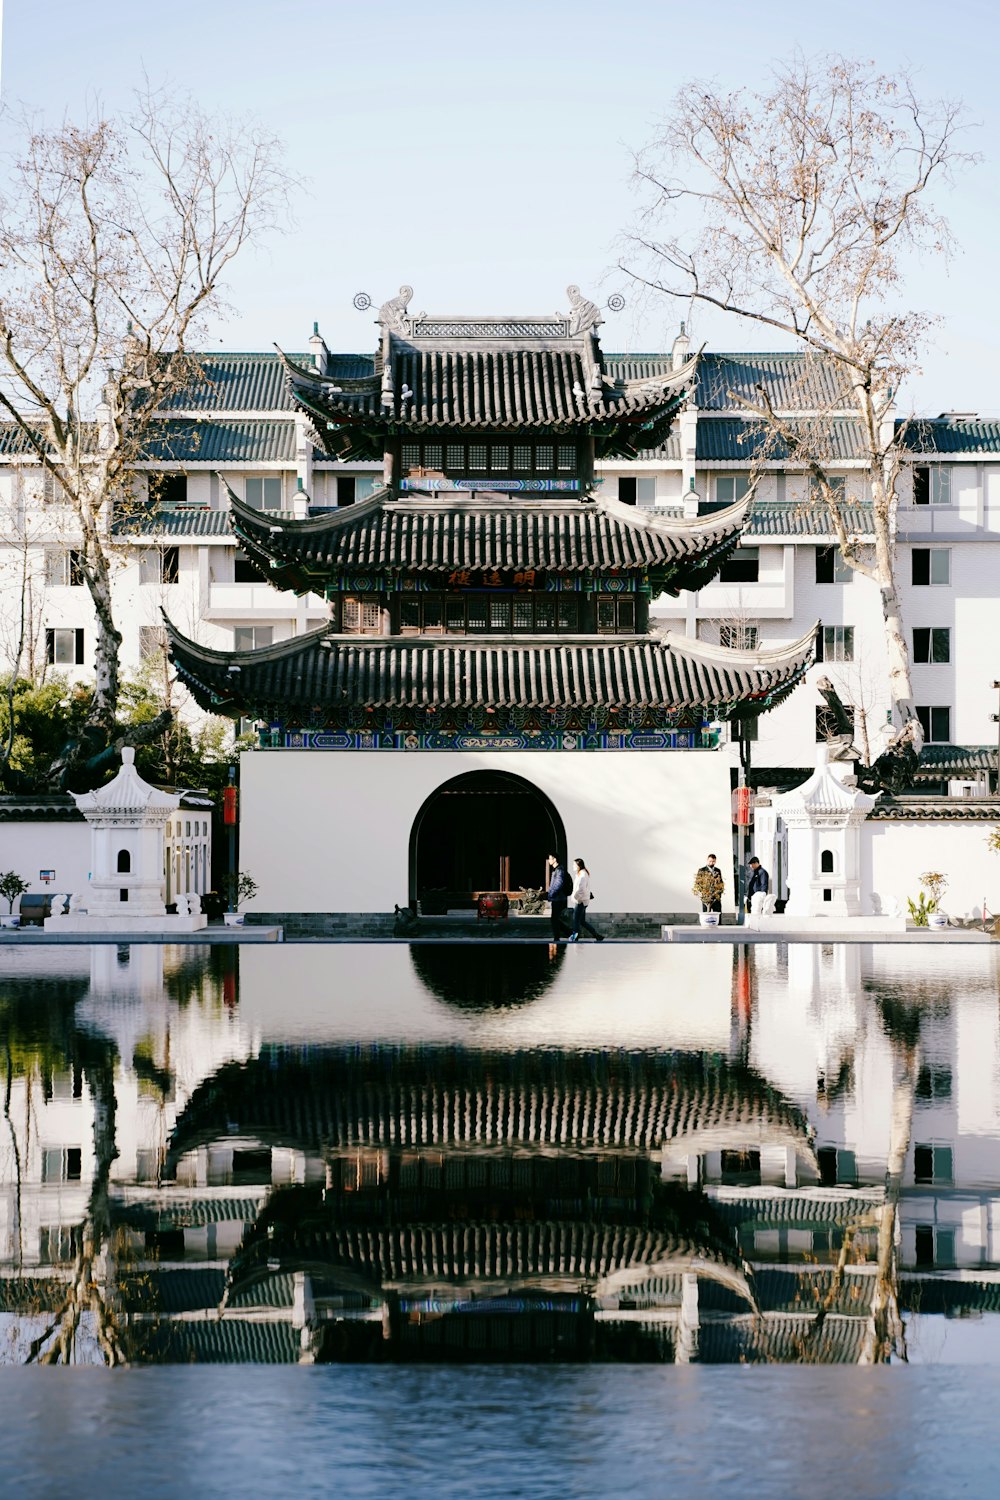 templo marrom e branco perto do corpo de água durante o dia